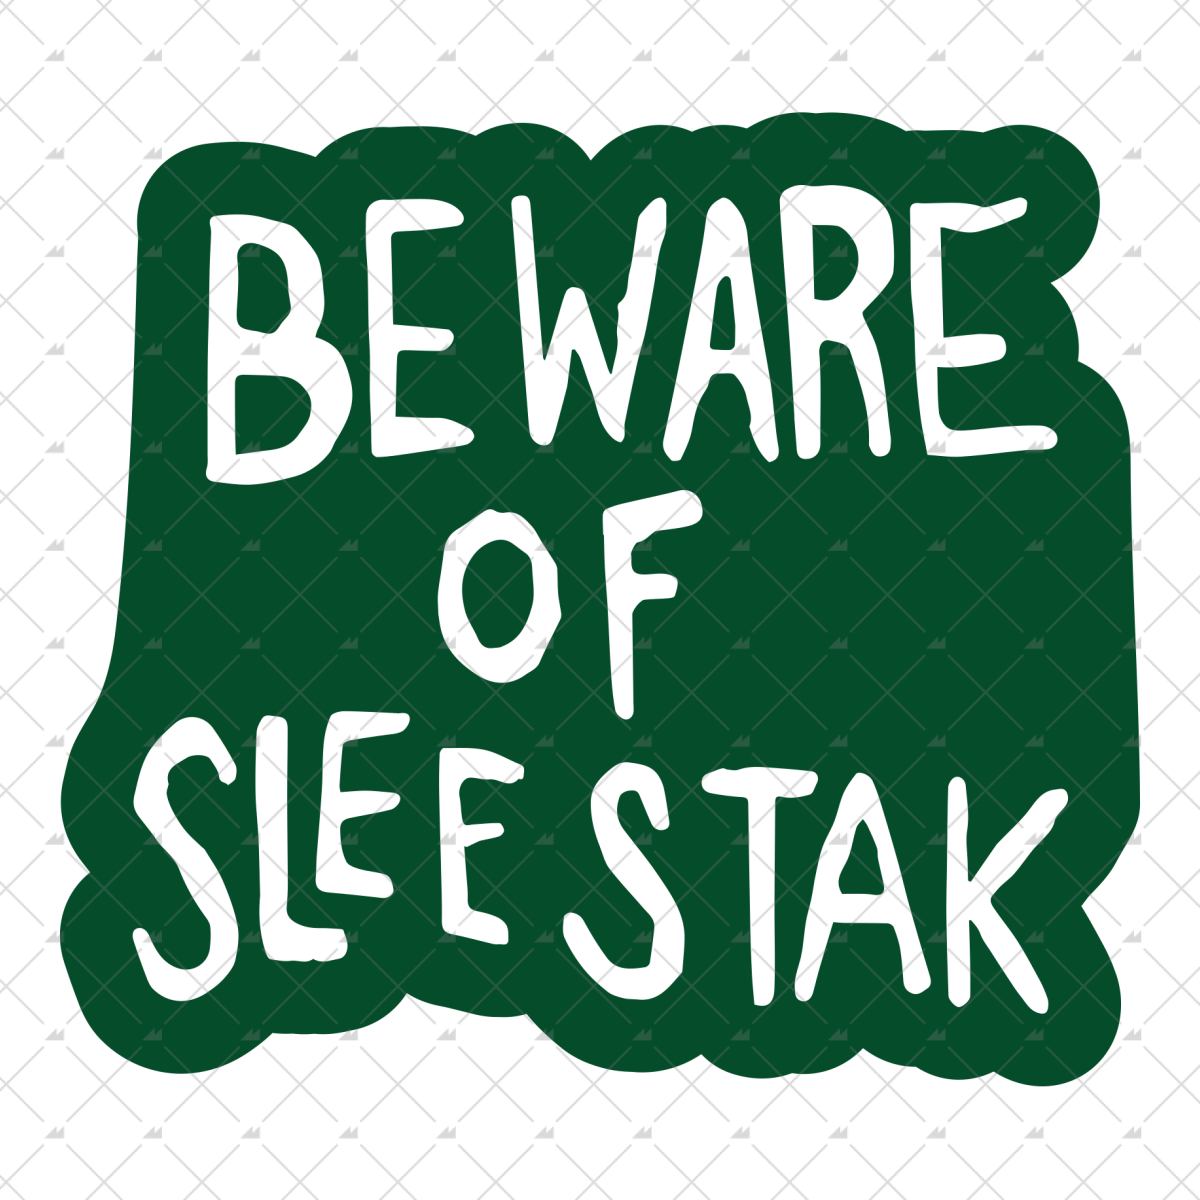 Beware of Sleestak - Sticker